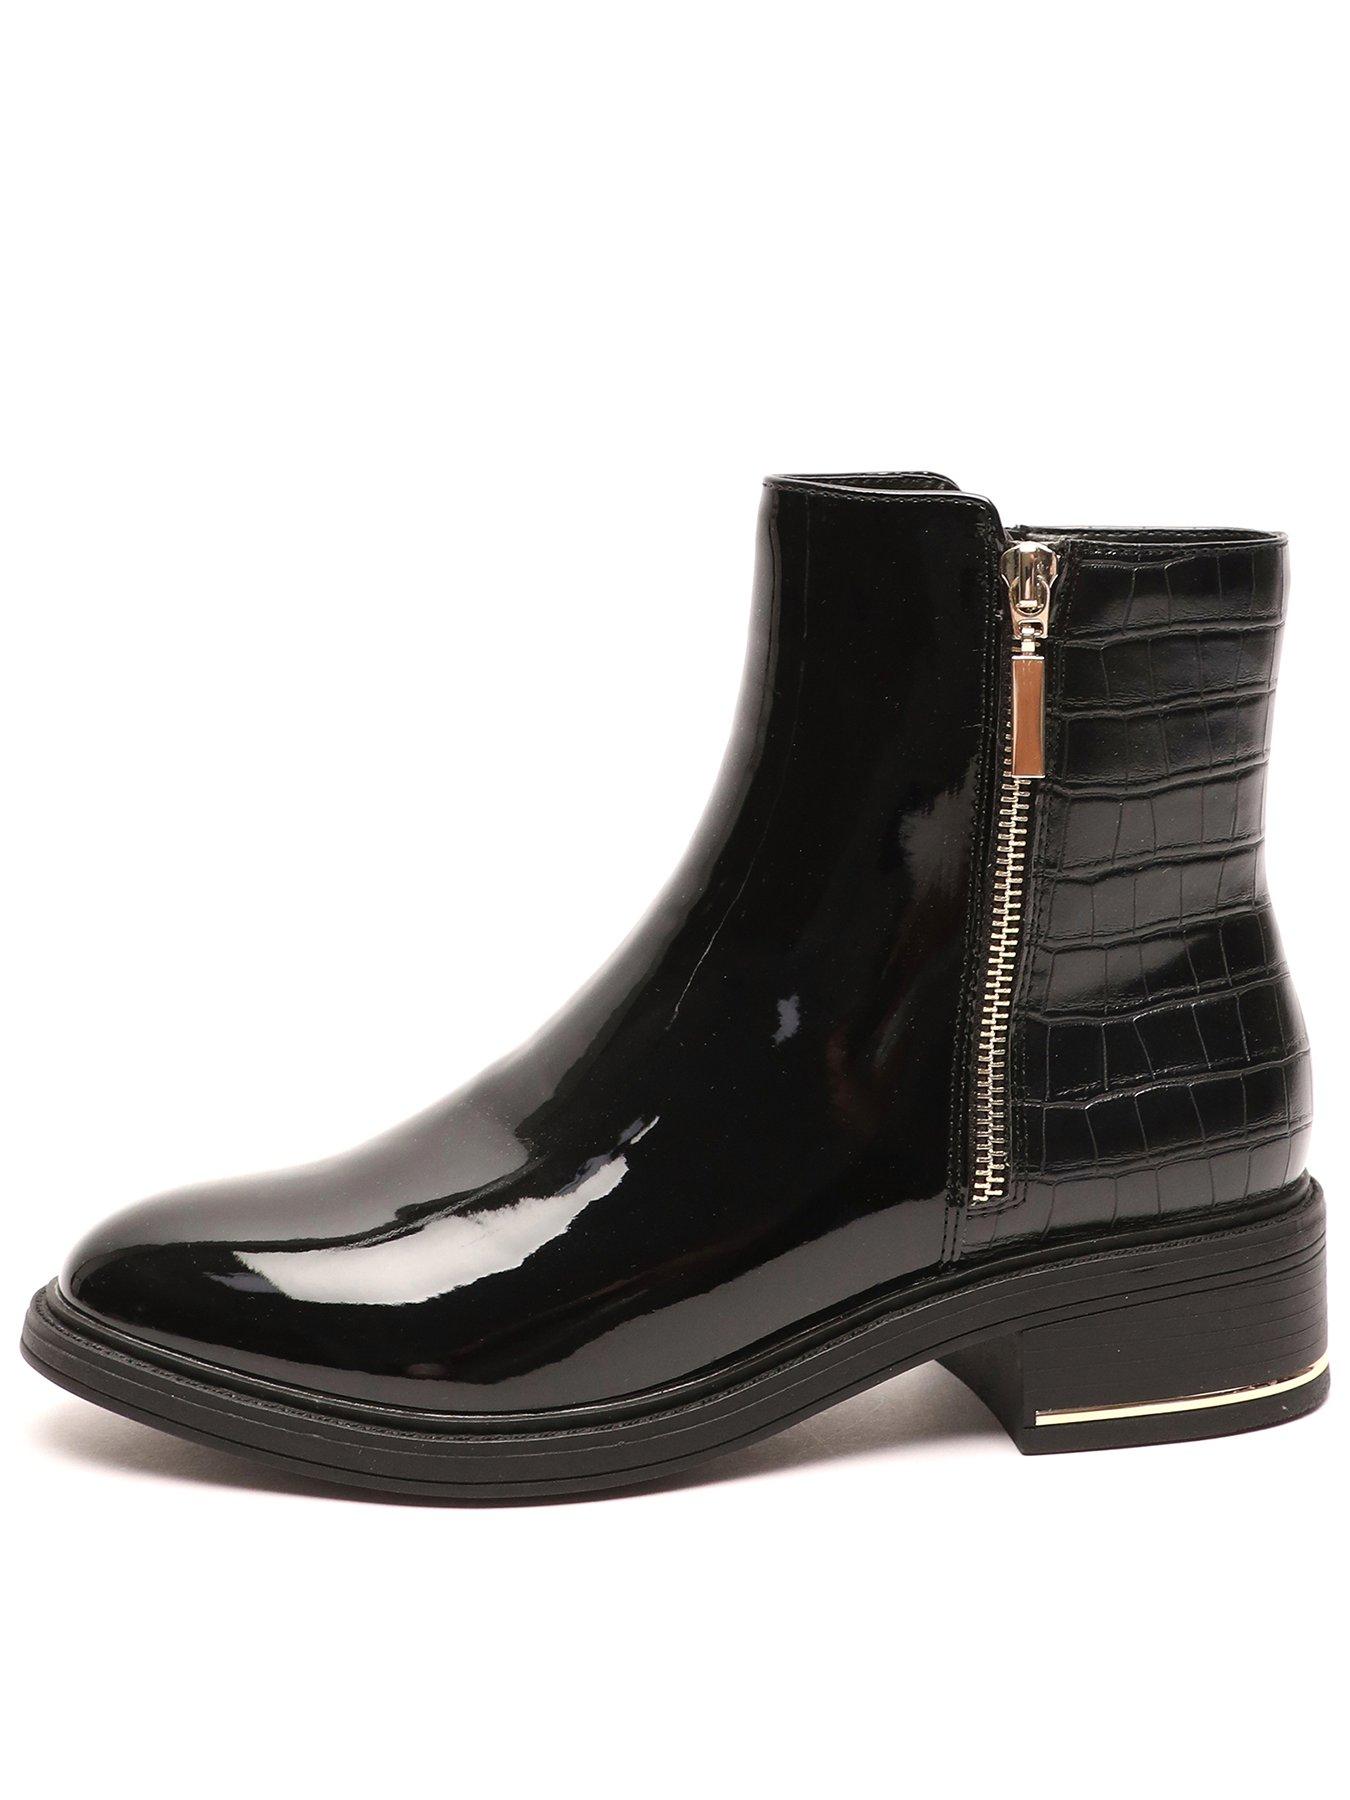 Black Patent Faux Leather Chelsea Boots<!-- --> - <!-- -->QUIZ Clothing